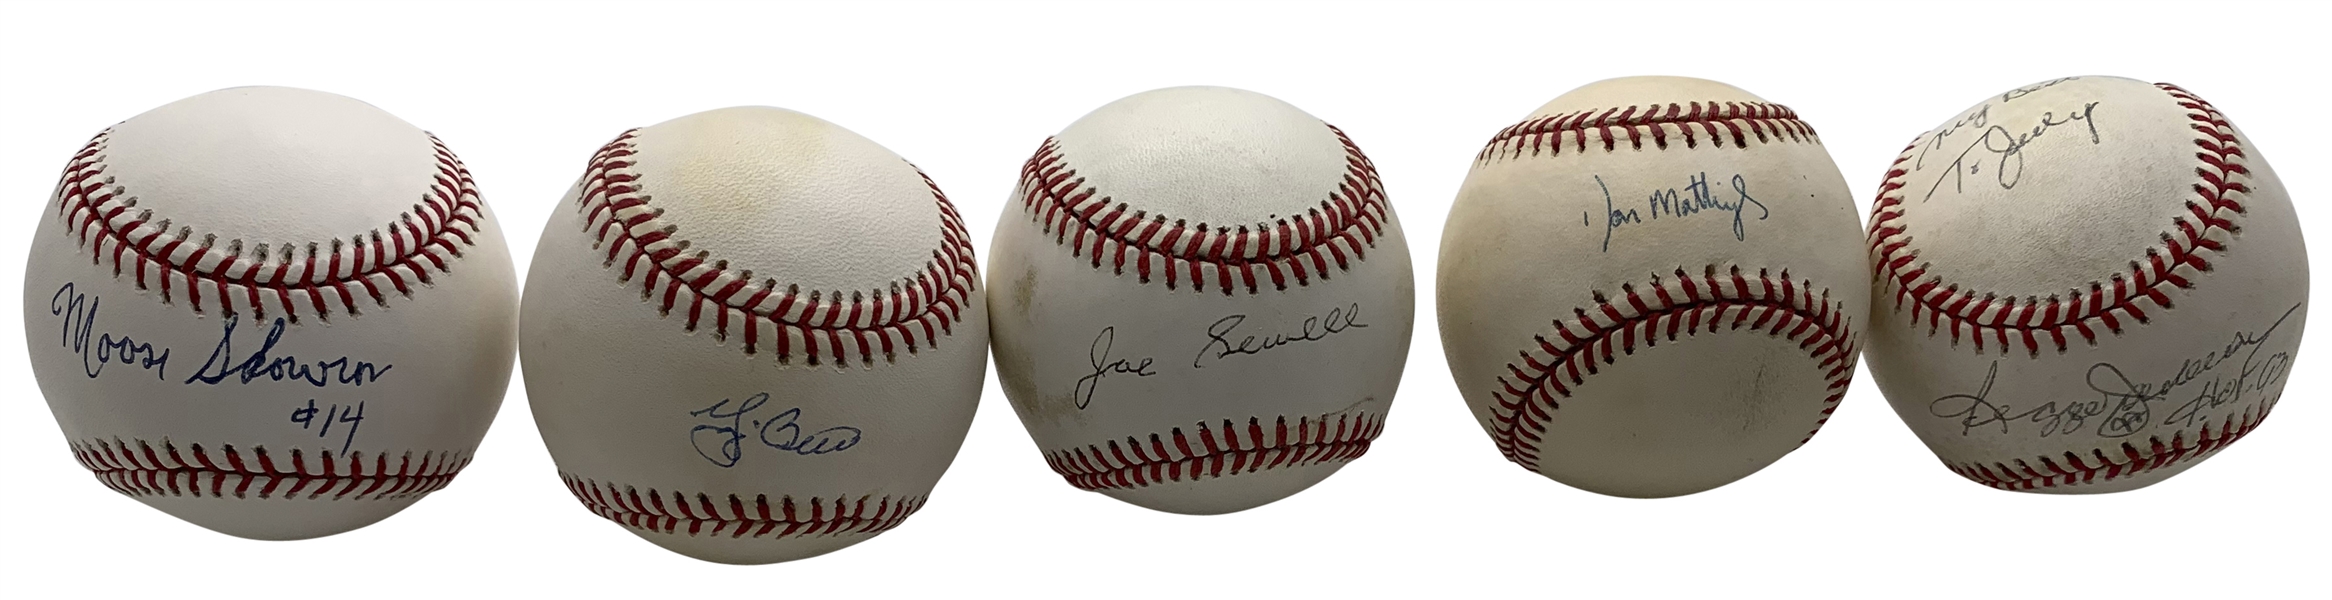 New York Yankee Greats Lot of Five (5) Single Signed Baseballs w/ Jackson, Berra & Others! (Beckett/BAS Guaranteed)